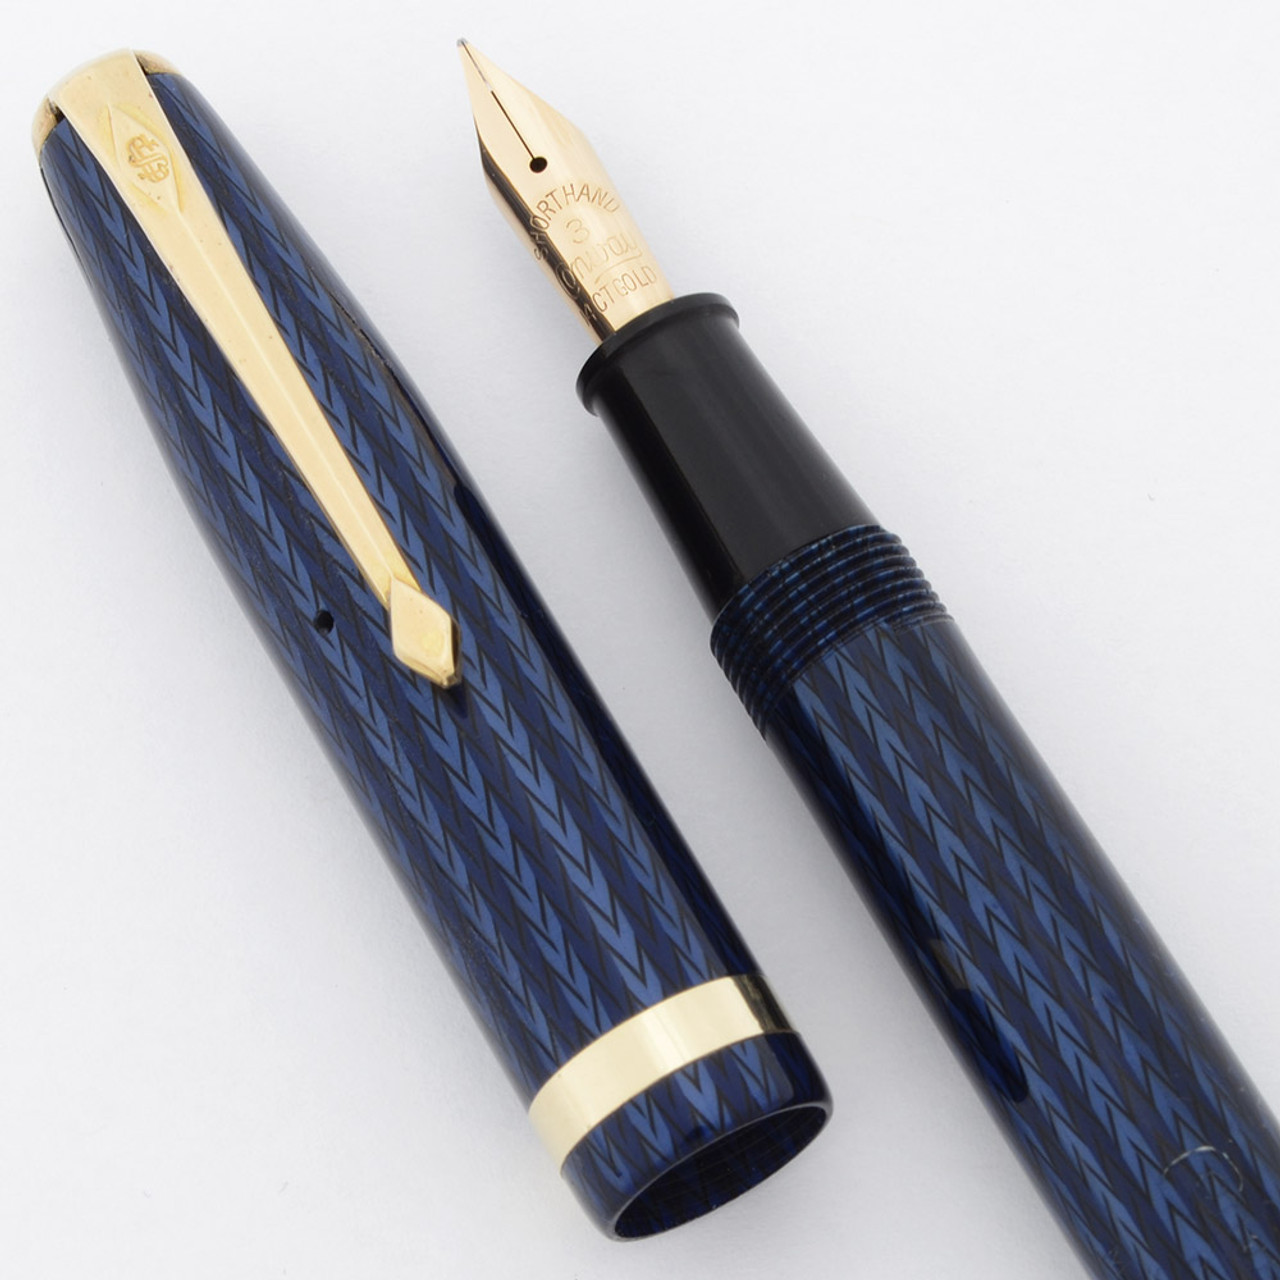 Conway Stewart Shorthand Fountain Pen (1950s) -  Blue Herringbone,  Lever Filler, 14k Shorthand #3 Nib (Excellent, Restored)